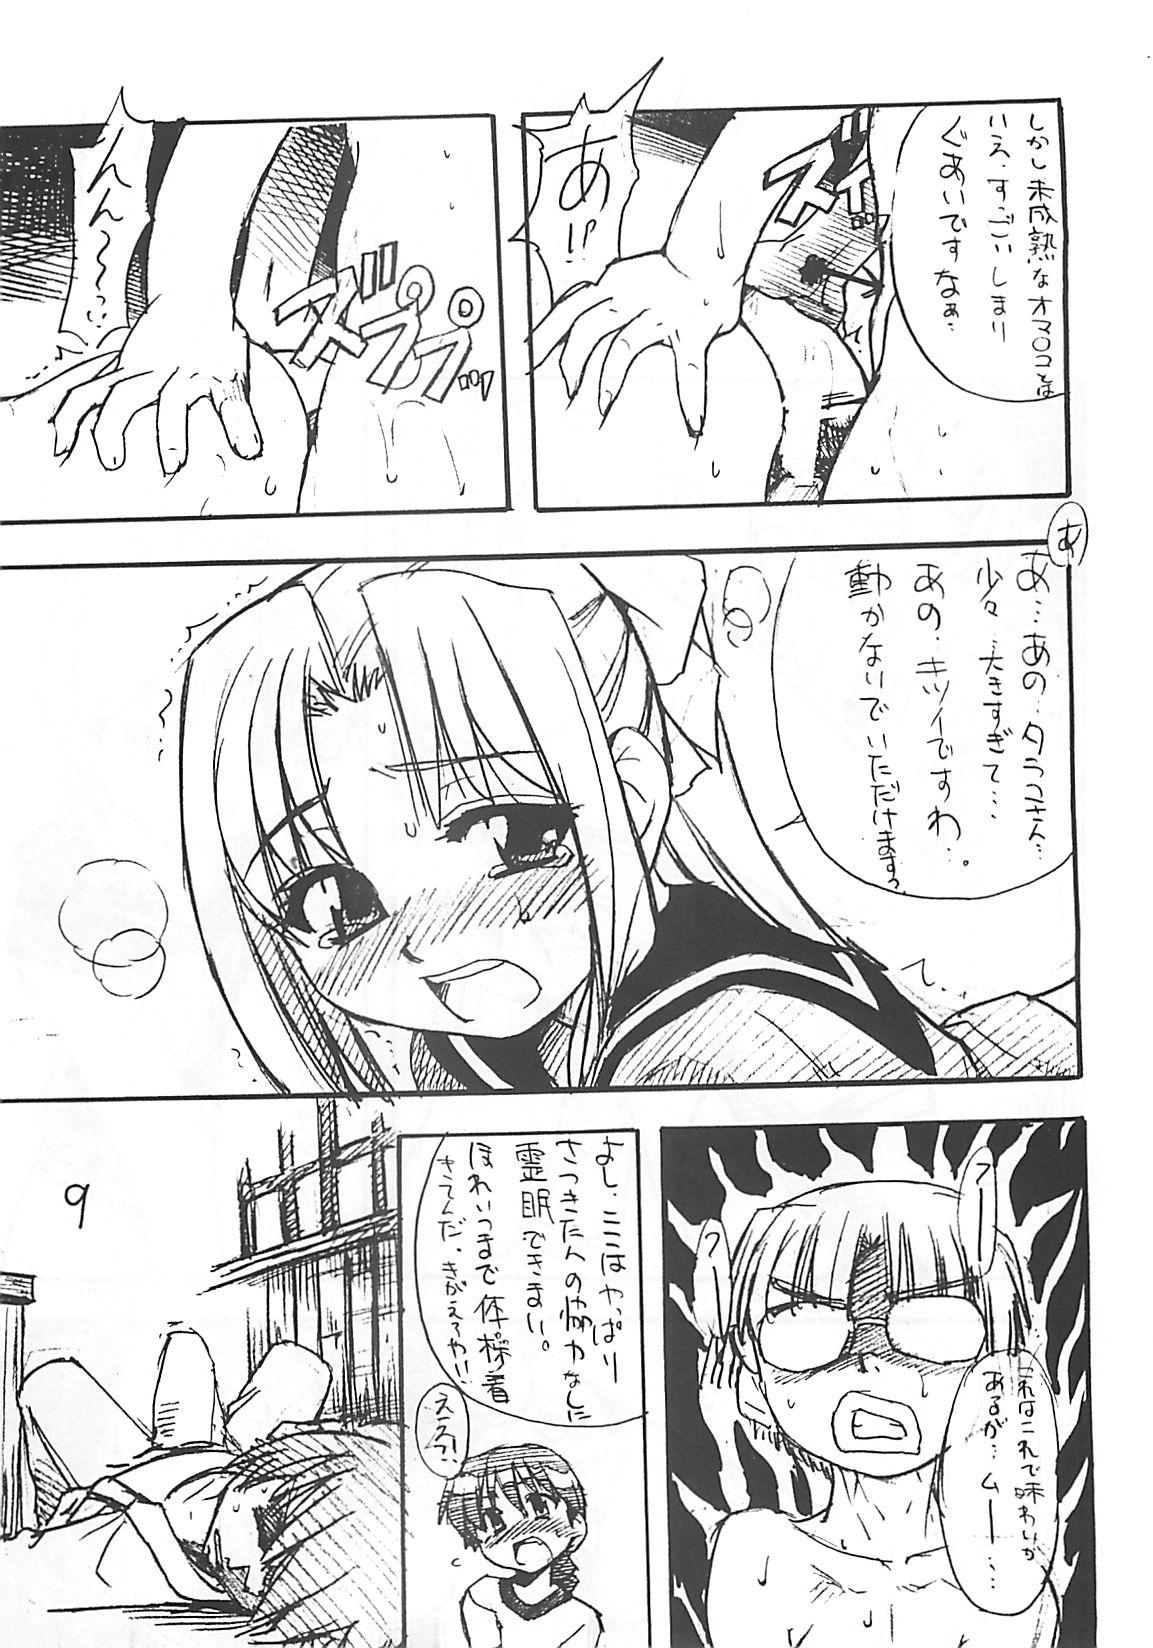 Friend Takehara Style 2 - Gakkou no kaidan Maid - Page 8